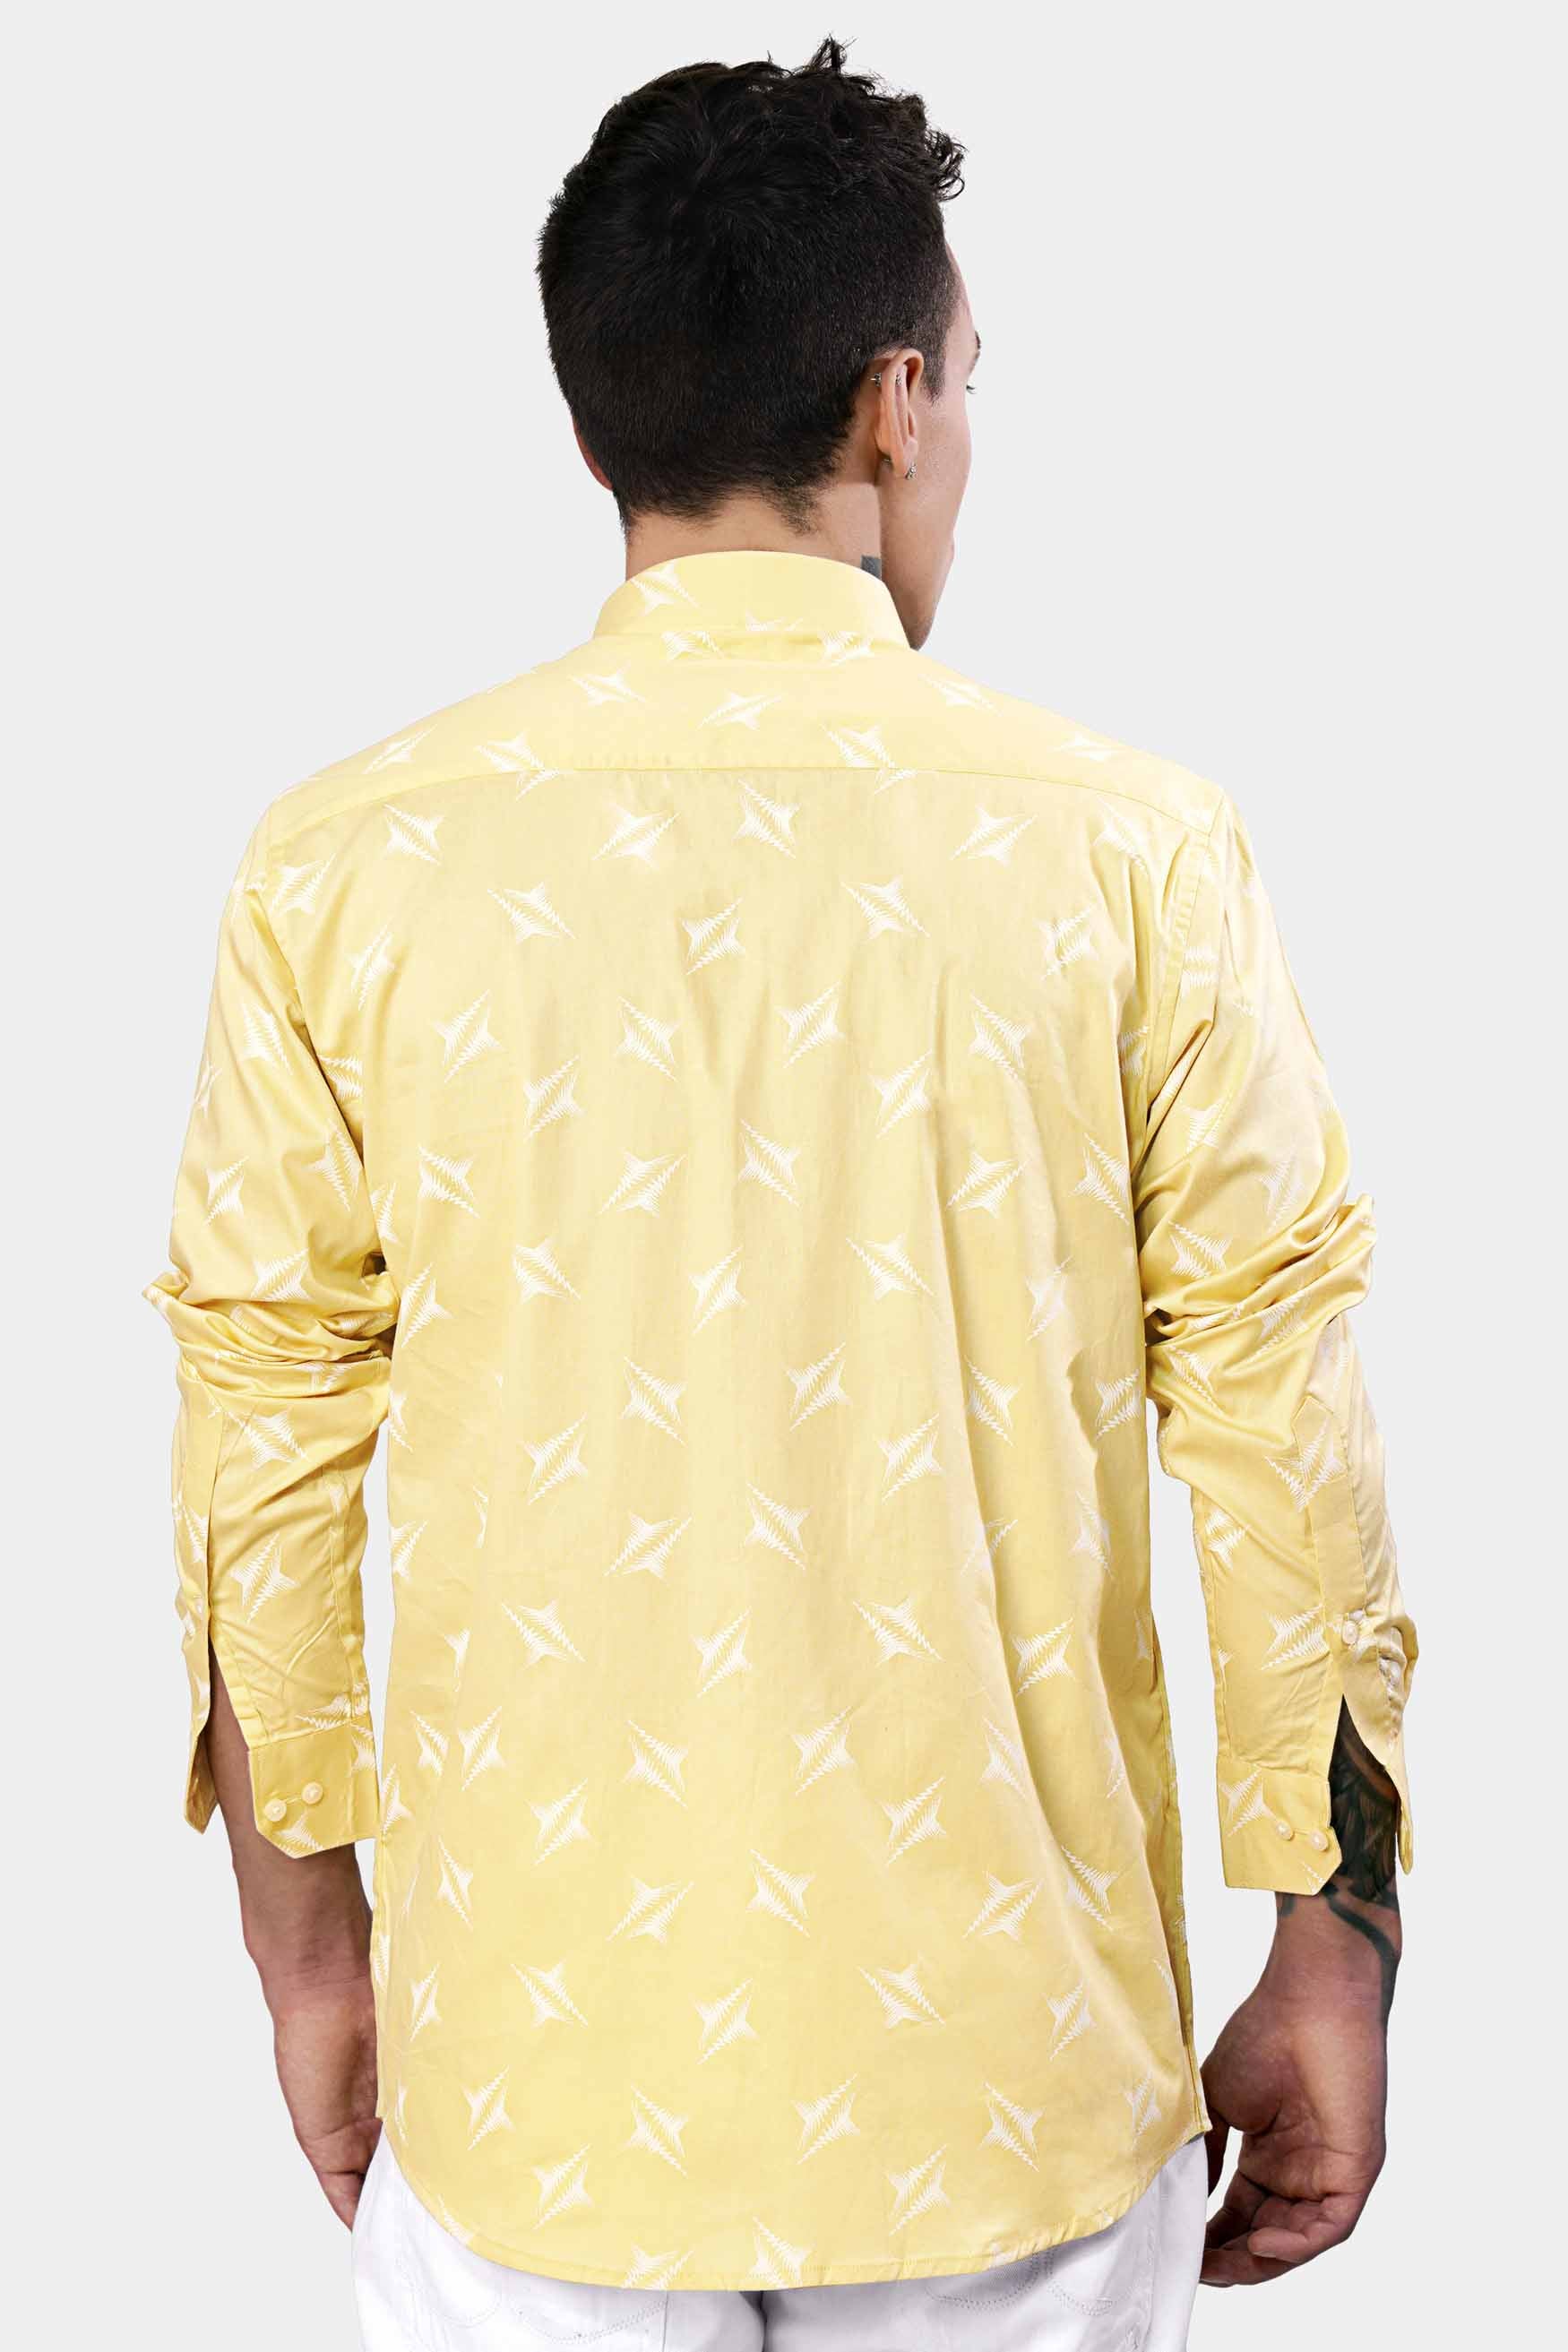 Sandwisp Yellow and White Printed Subtle Sheen Super Soft Premium Cotton Shirt